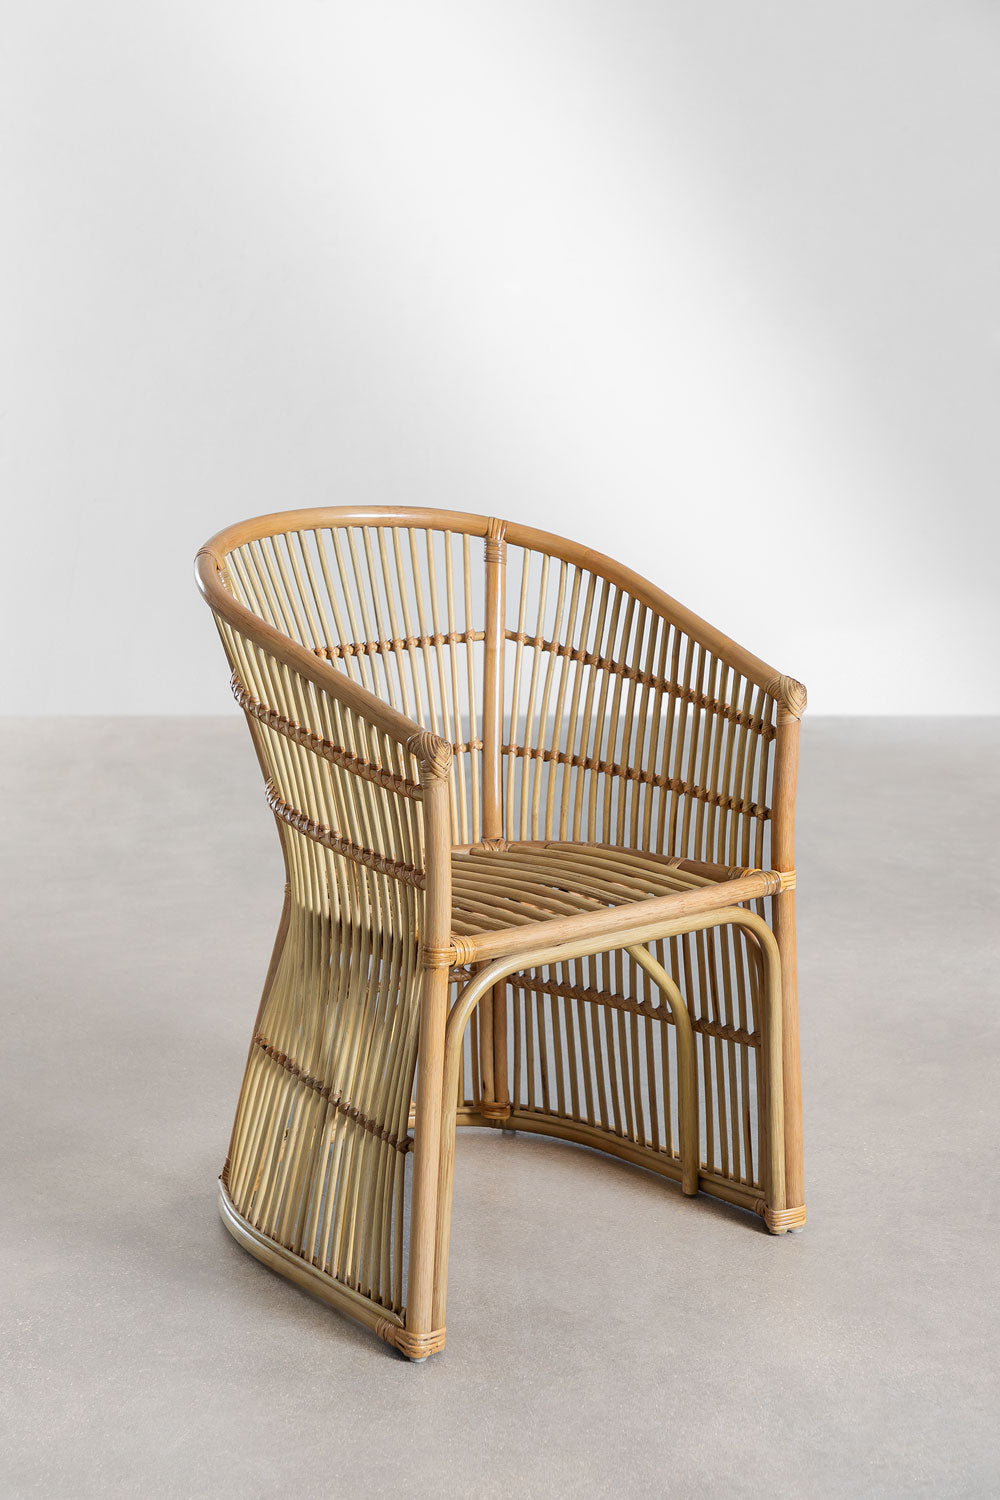 Cane chairs for Lounge | Bamboo Chairs for garden - Mahika - Akway